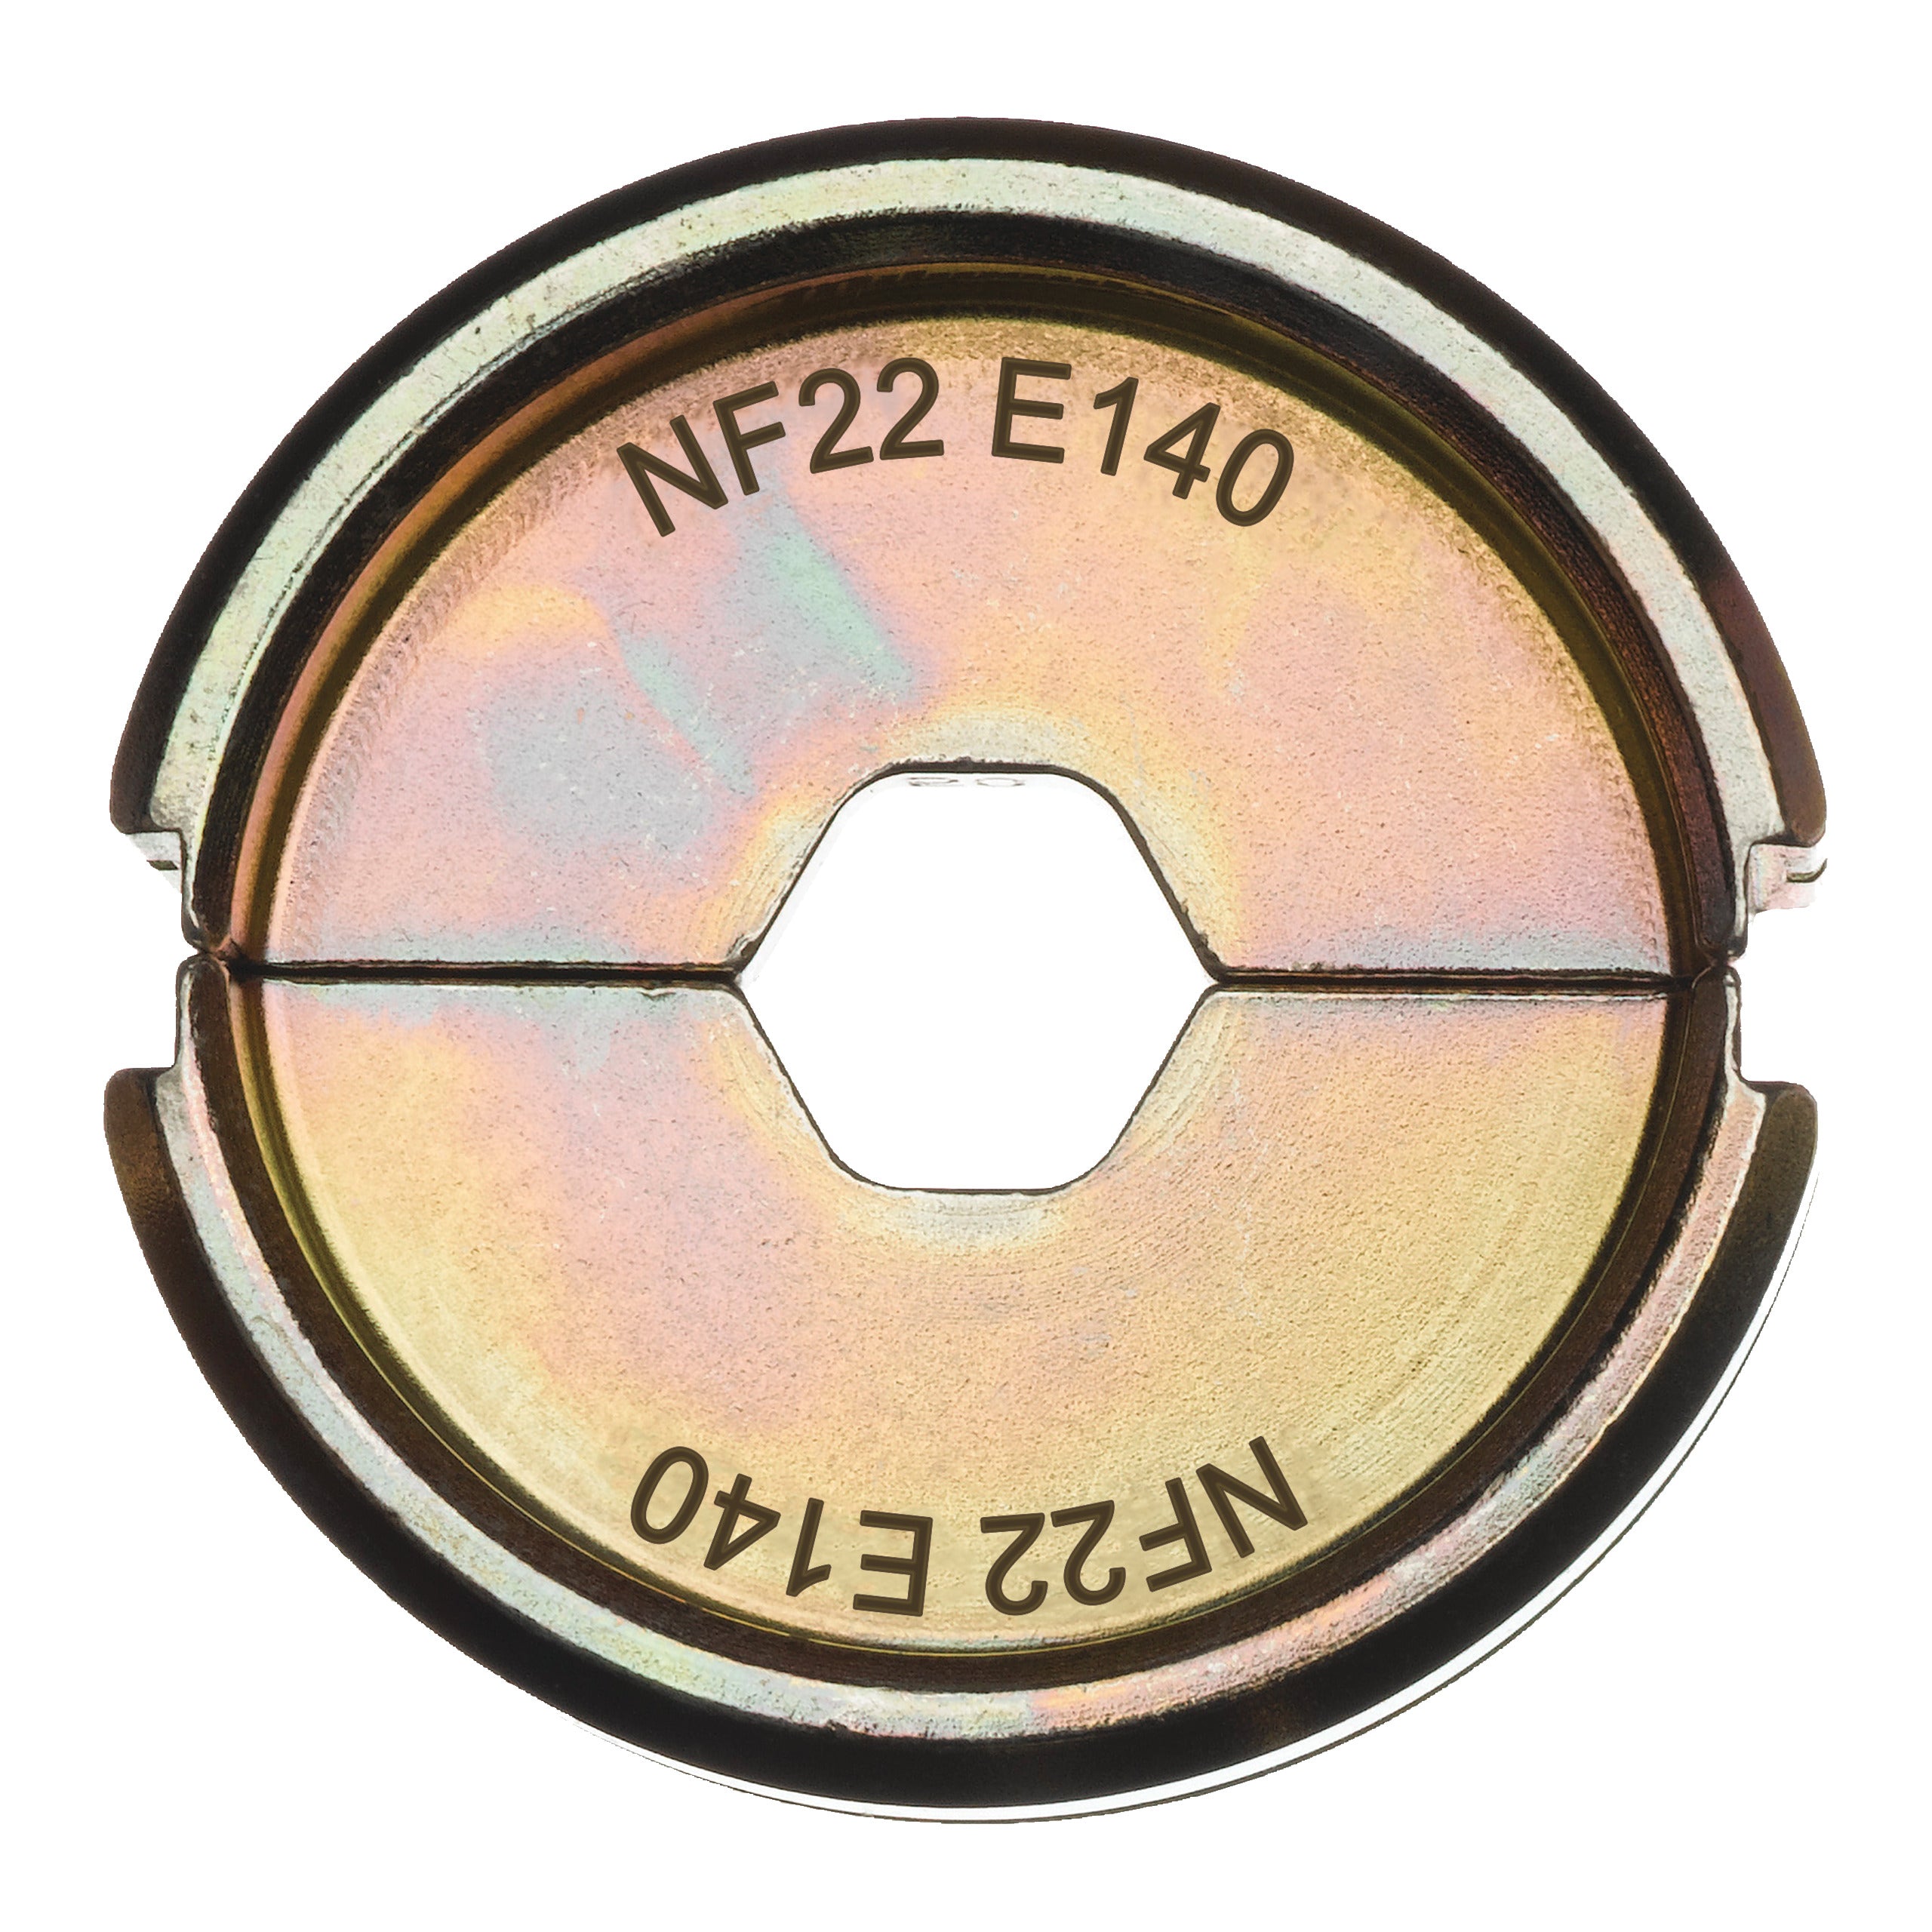 MATRICE POUR SERTISSEUSE FORCE LOGIC (ELECTRICITE) NF22 E140